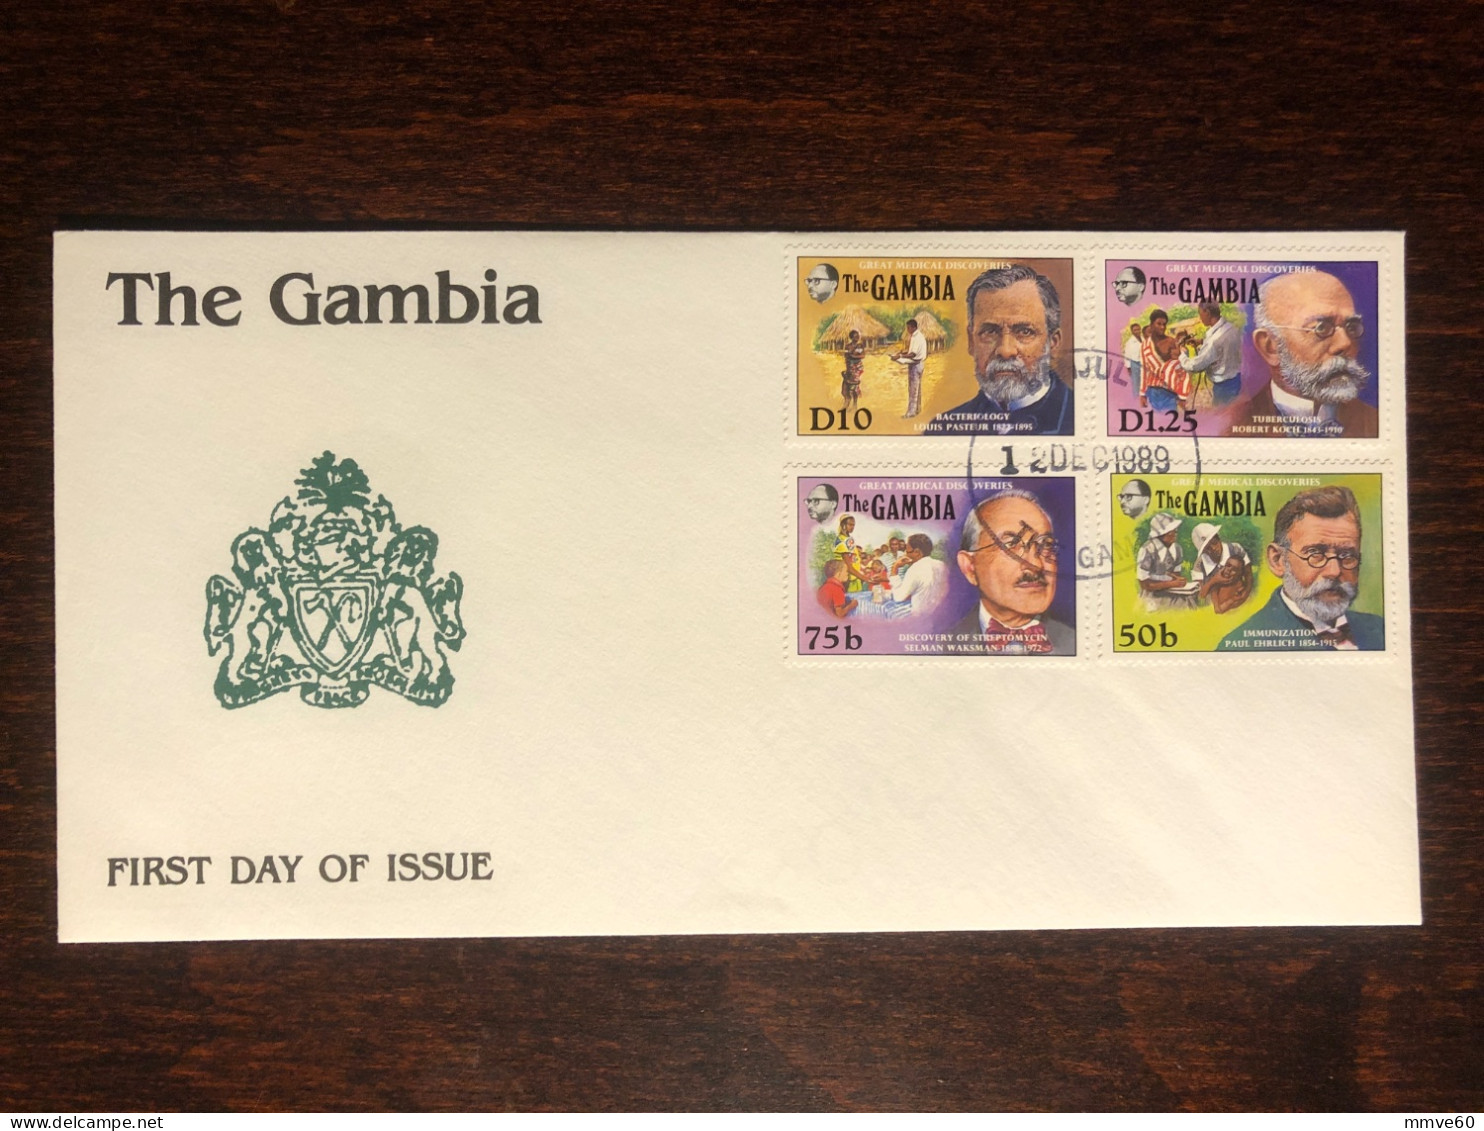 GAMBIA FDC COVER 1989 YEAR MEDICAL PIONIERS - KOCH, PASTEUR, WAKSMAN, EHRLICH HEALTH MEDICINE STAMPS - Gambie (1965-...)